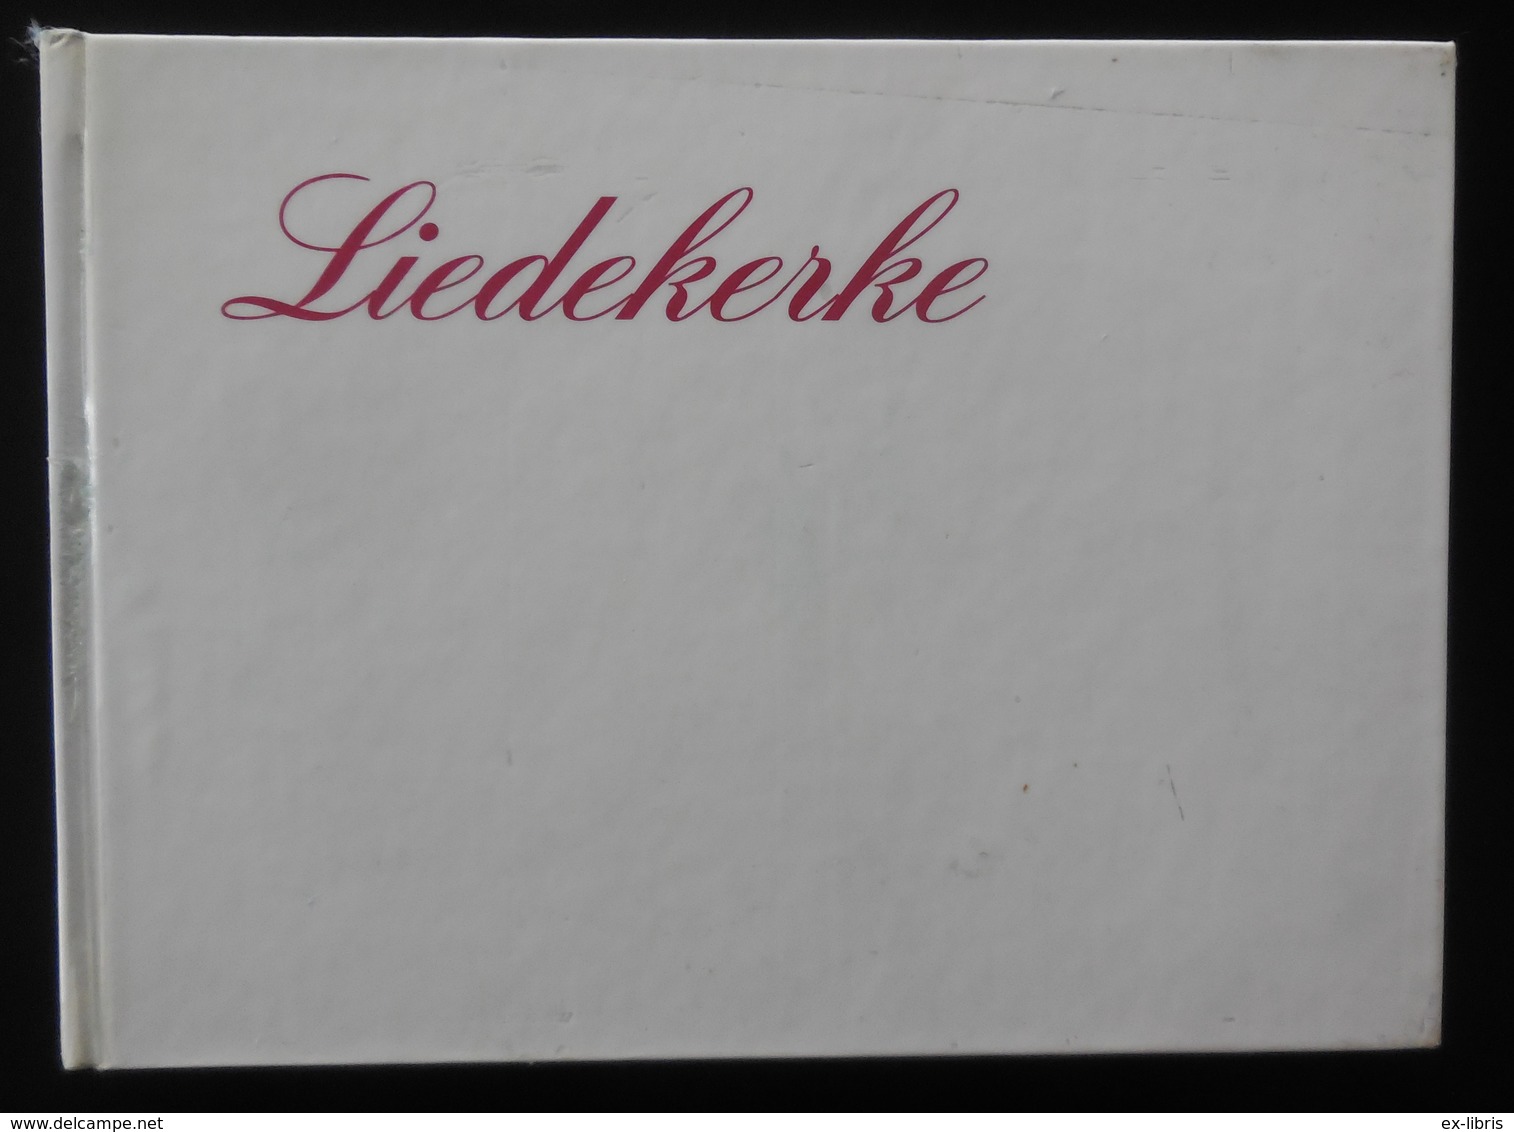 LIEDEKERKE - Liedekerke - William Cobbaert, 1992 - Histoire